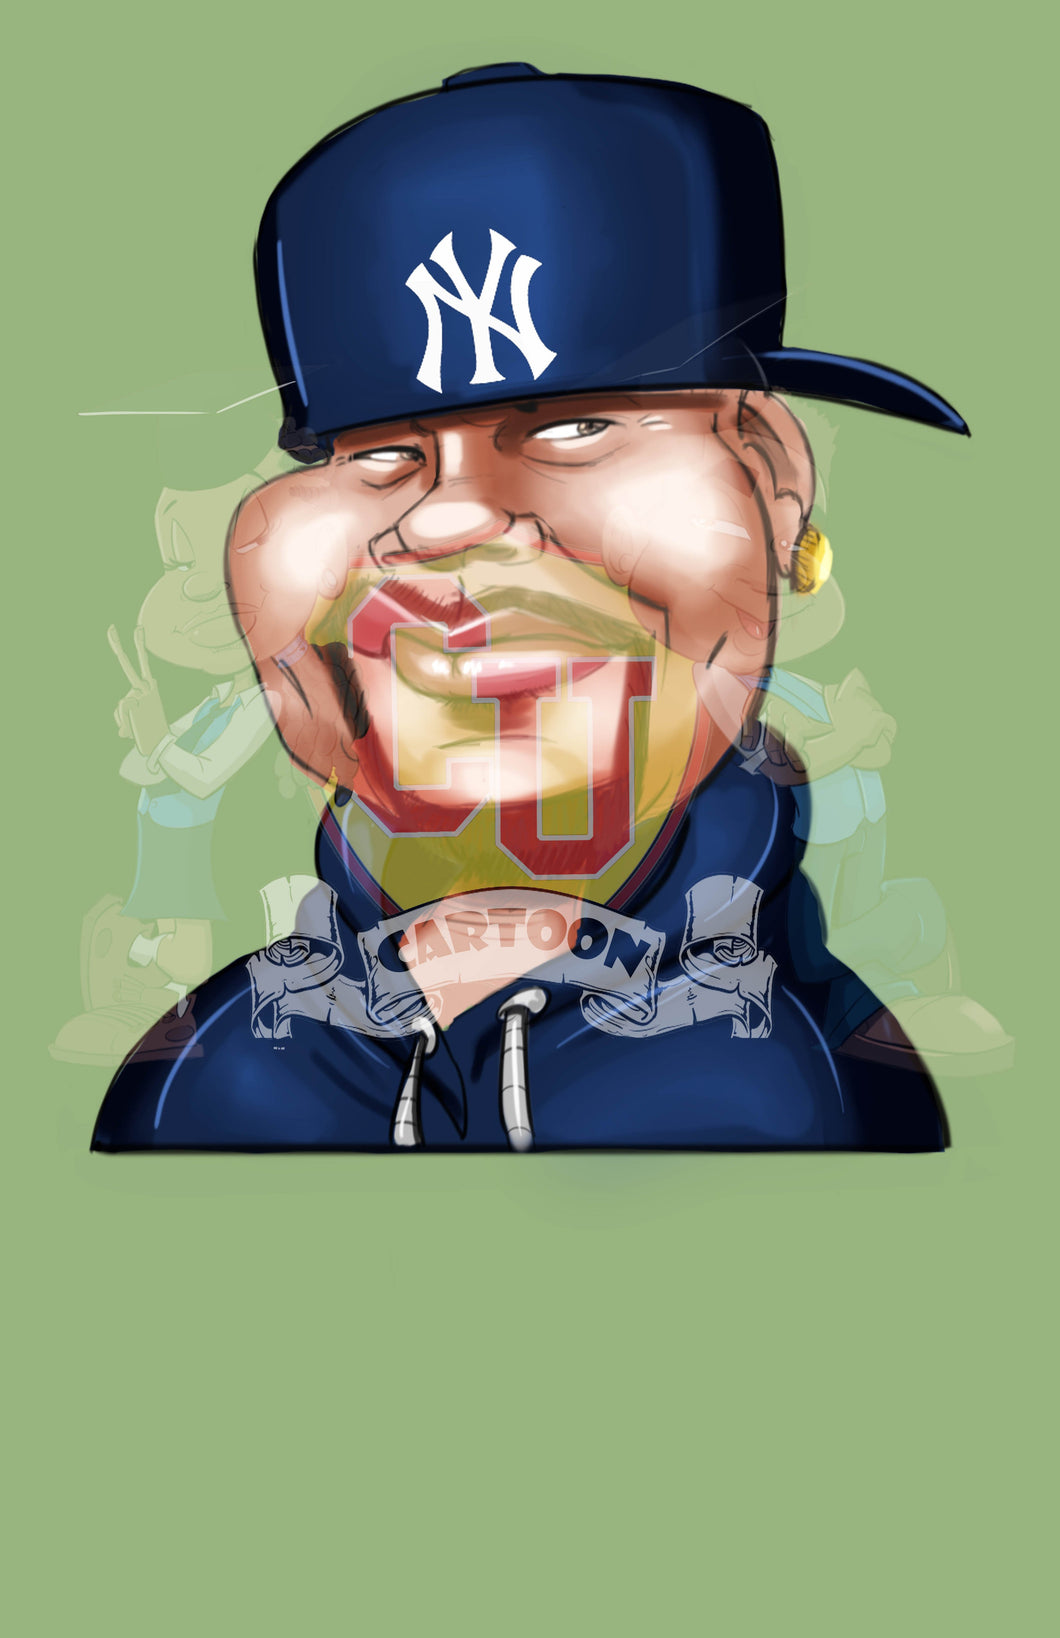 Fat Joe w/o background (exclusive) PNG PNG File Gemini2face Art E-Store 